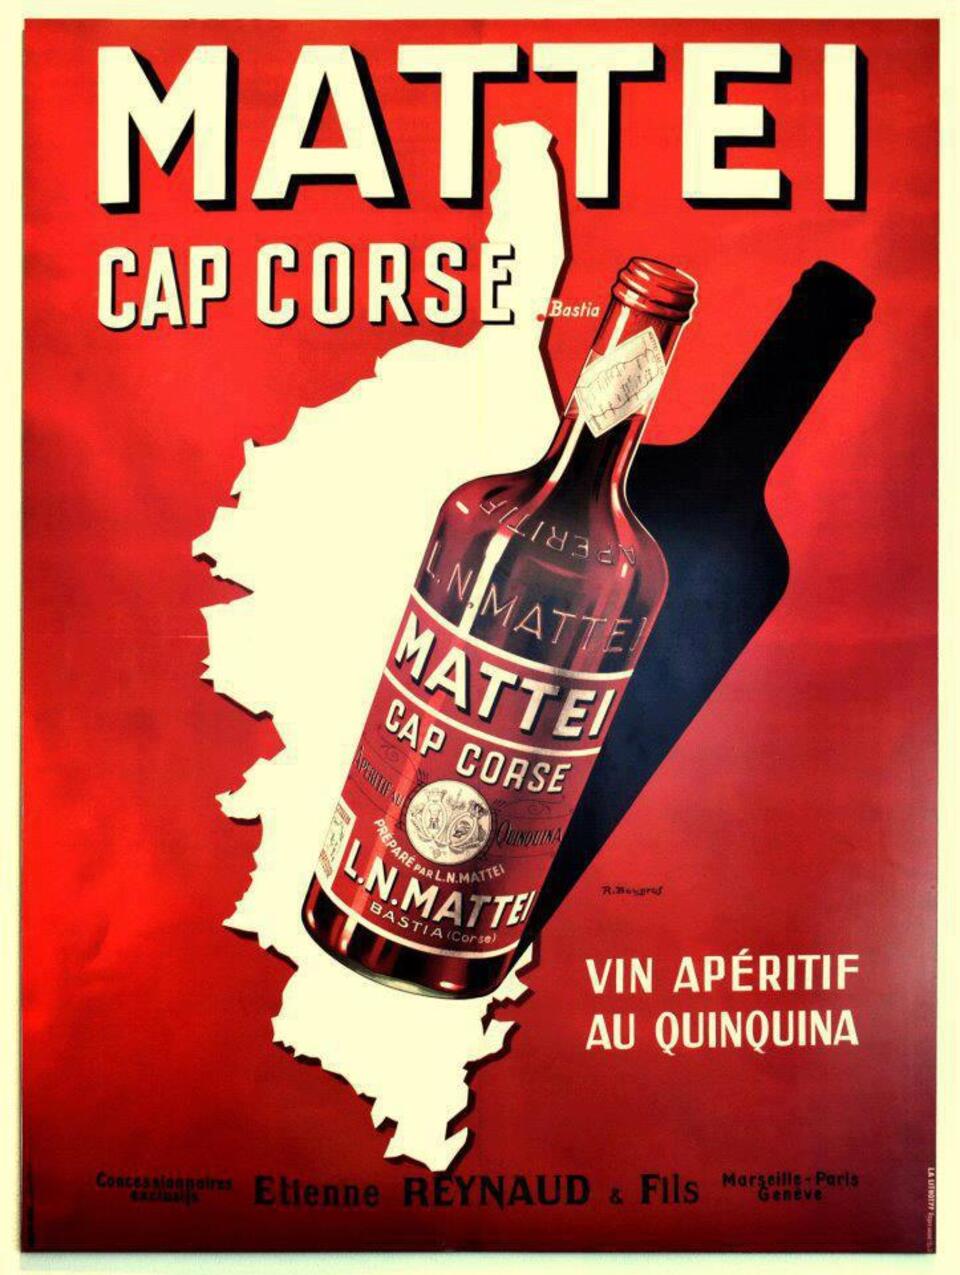 Apéritif Aléria - Tonique - Cap L.N. Corse Distillerie Vin Corse - Mattei